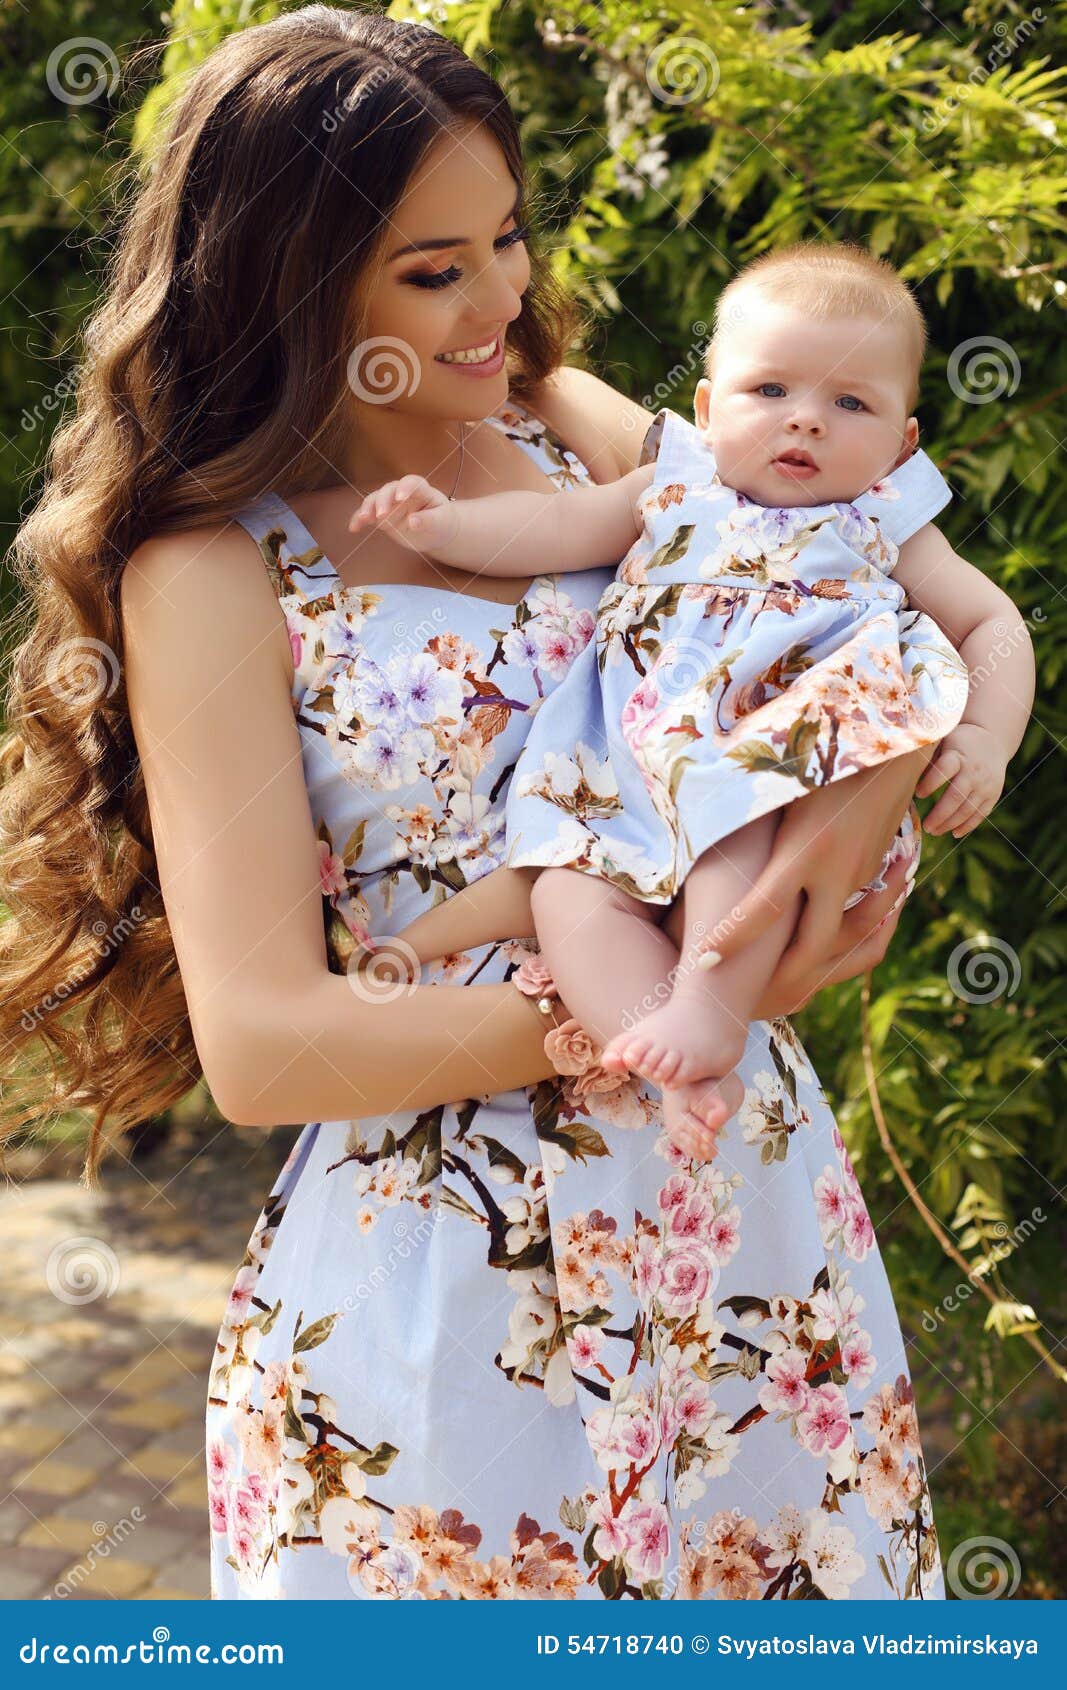 vestido mae e filha bebe